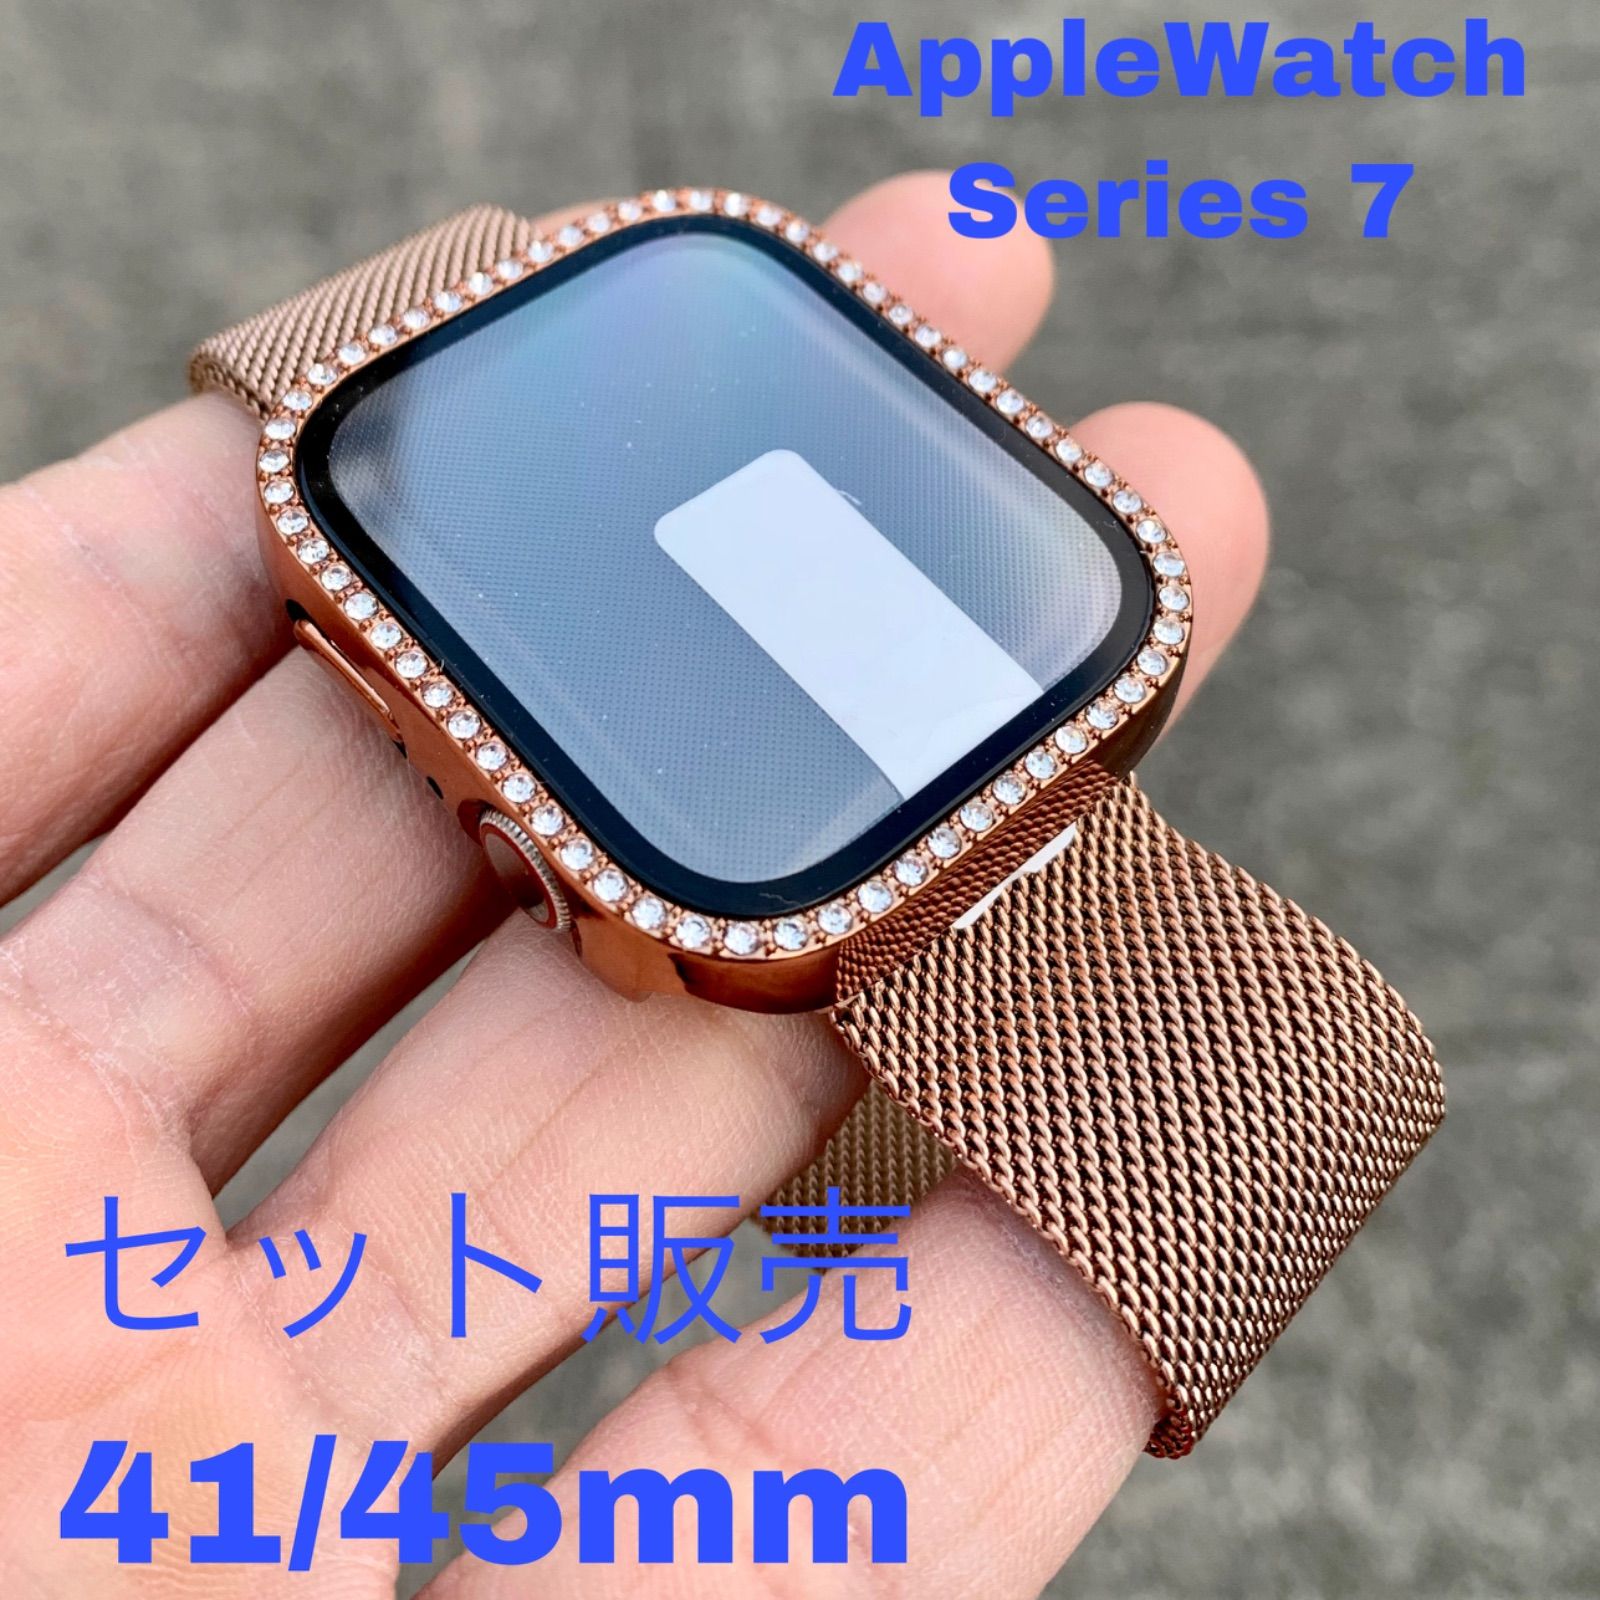 AppleWatch 7 とApple Watch Case セット | web-flake.com